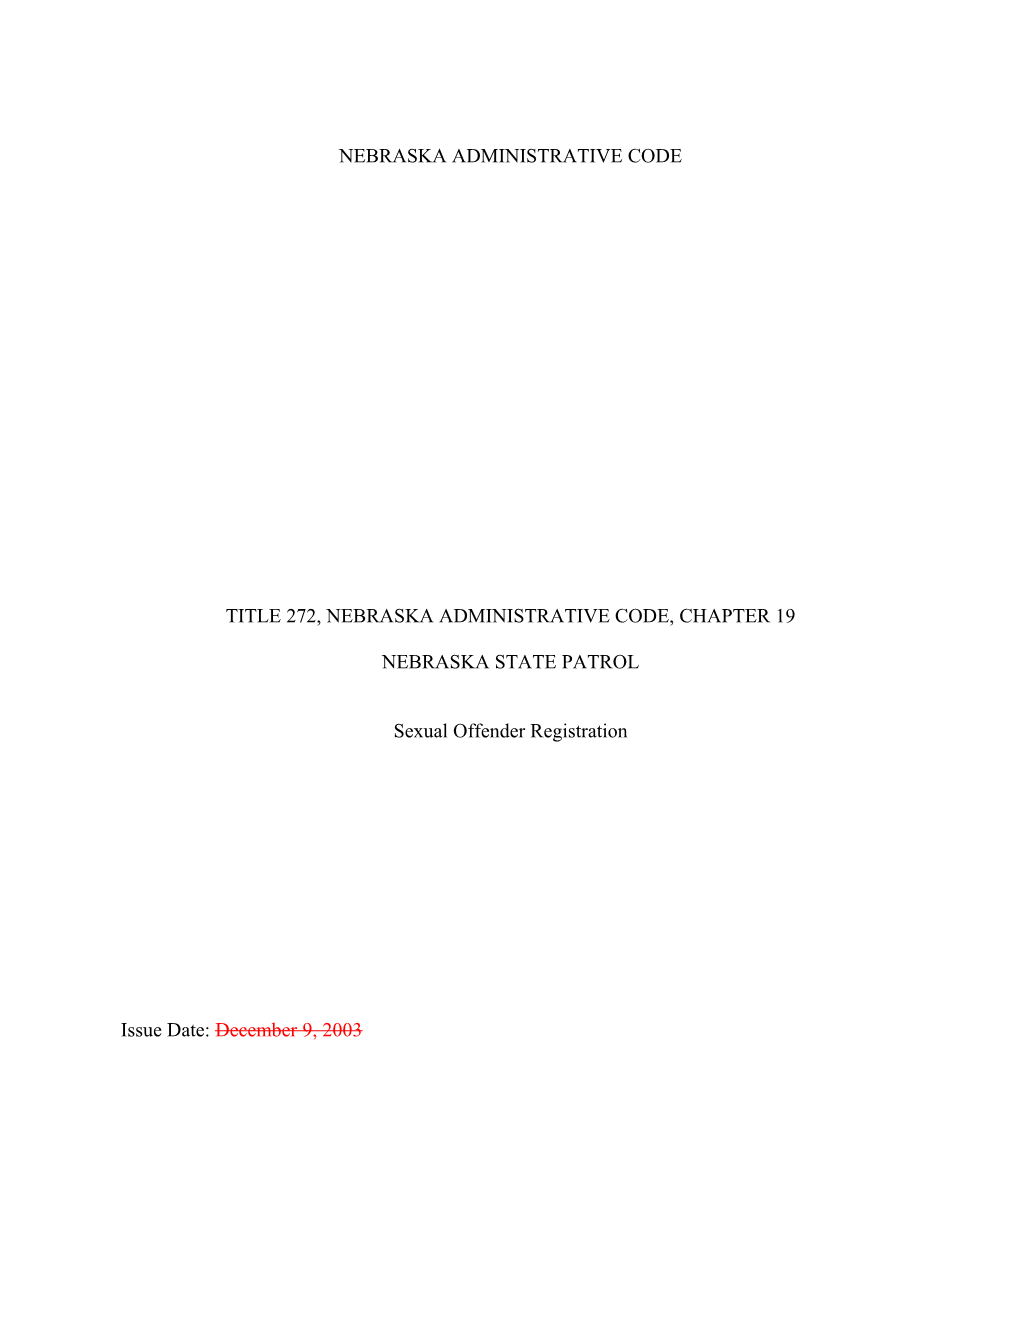 Title 272, Nebraska Administrative Code, Chapter 19